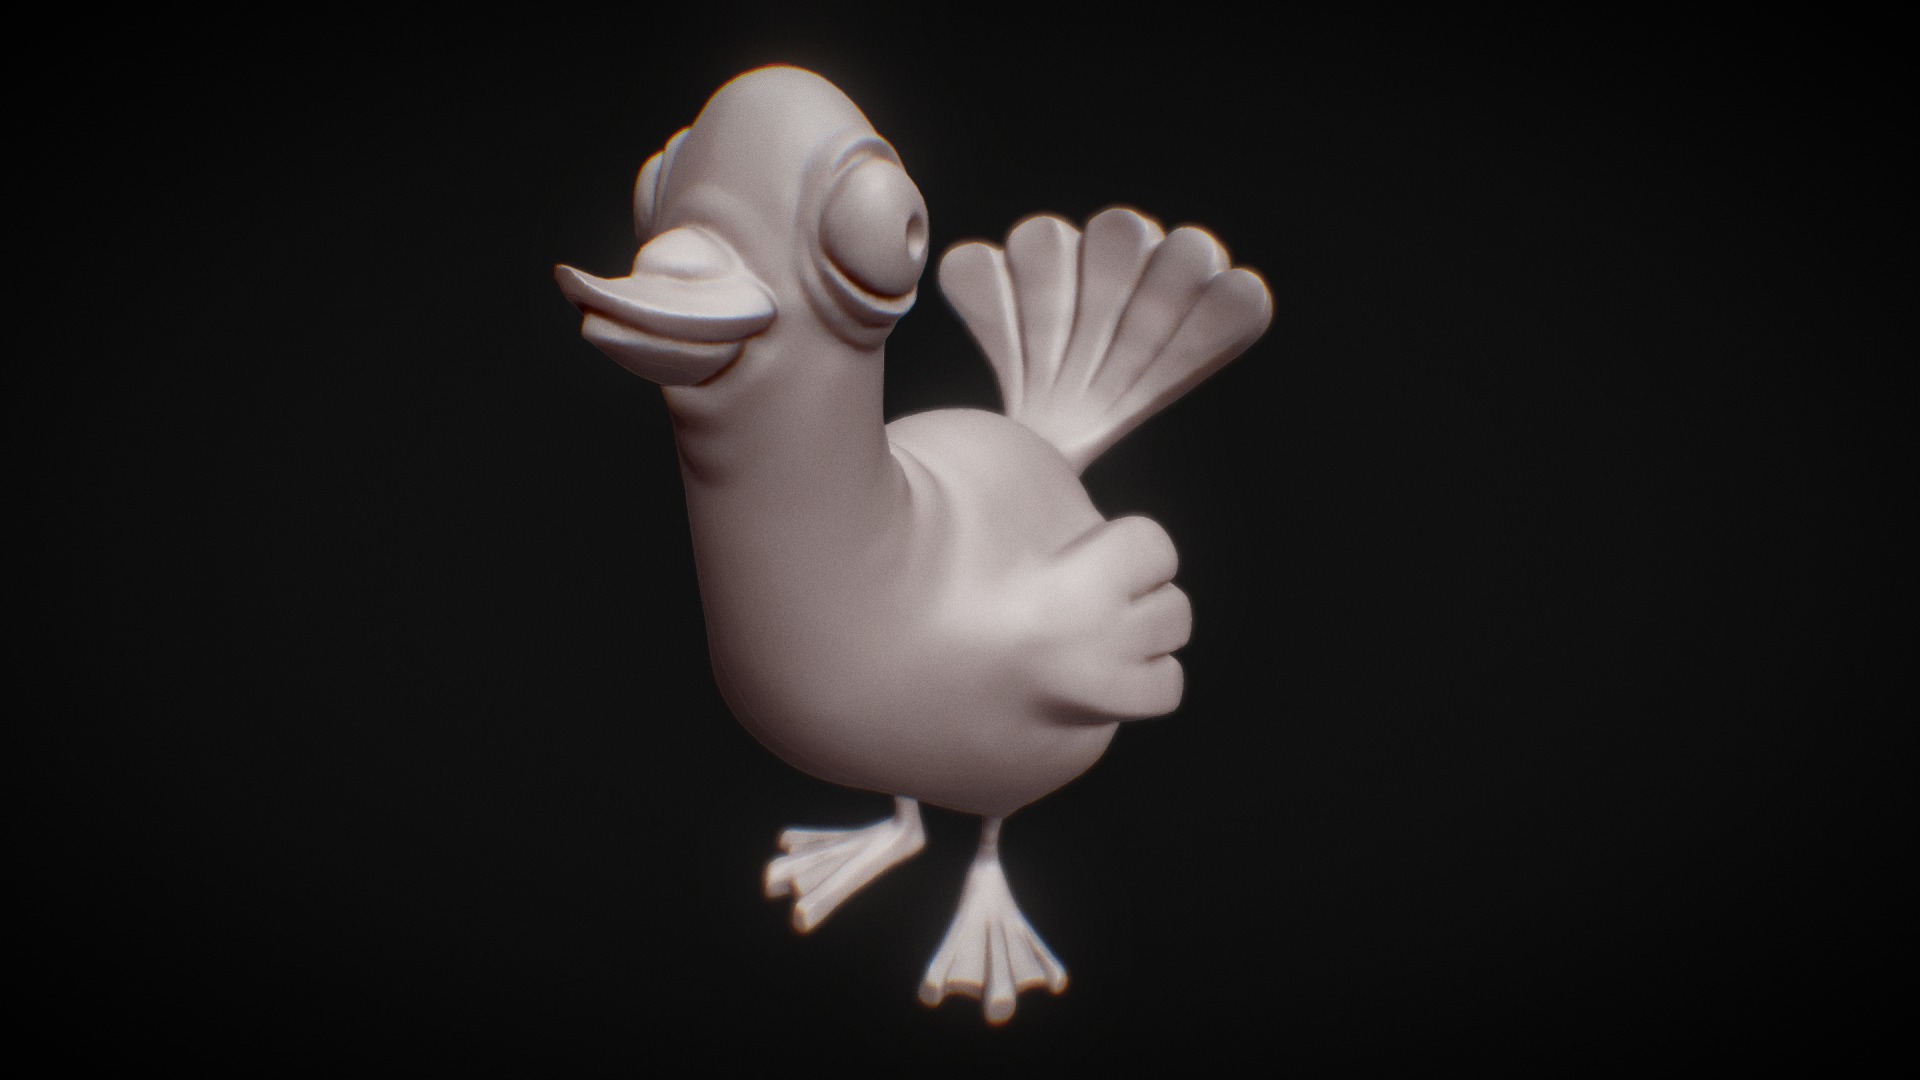 Cartoon Pigeon
timelapse : http://youtu.be/2rxs7pMEBiM - Cartoon Pigeon - 3D model by theWingedPlatypus 3d model